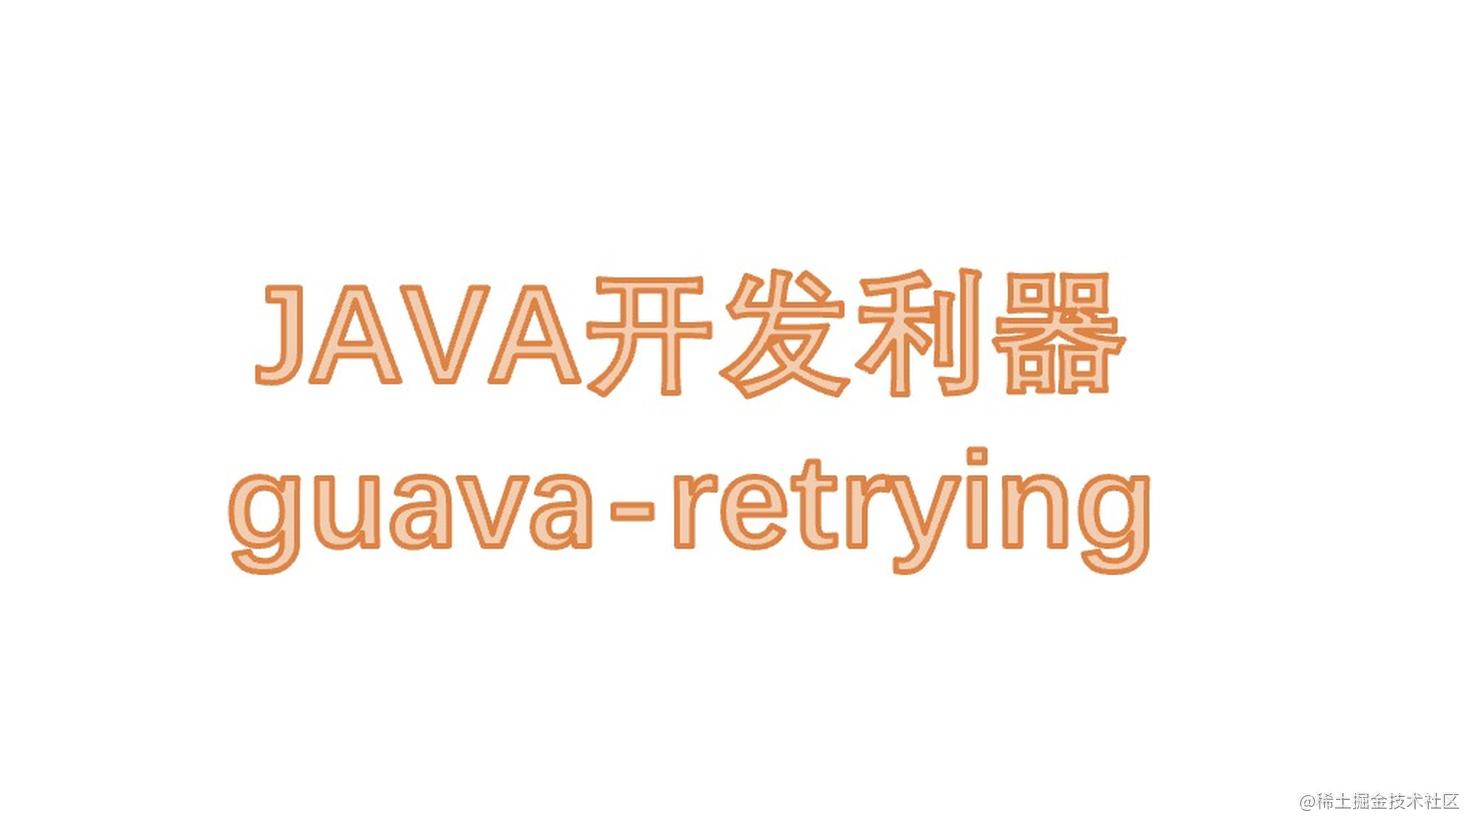 Java开发利器之重试框架guava-retrying